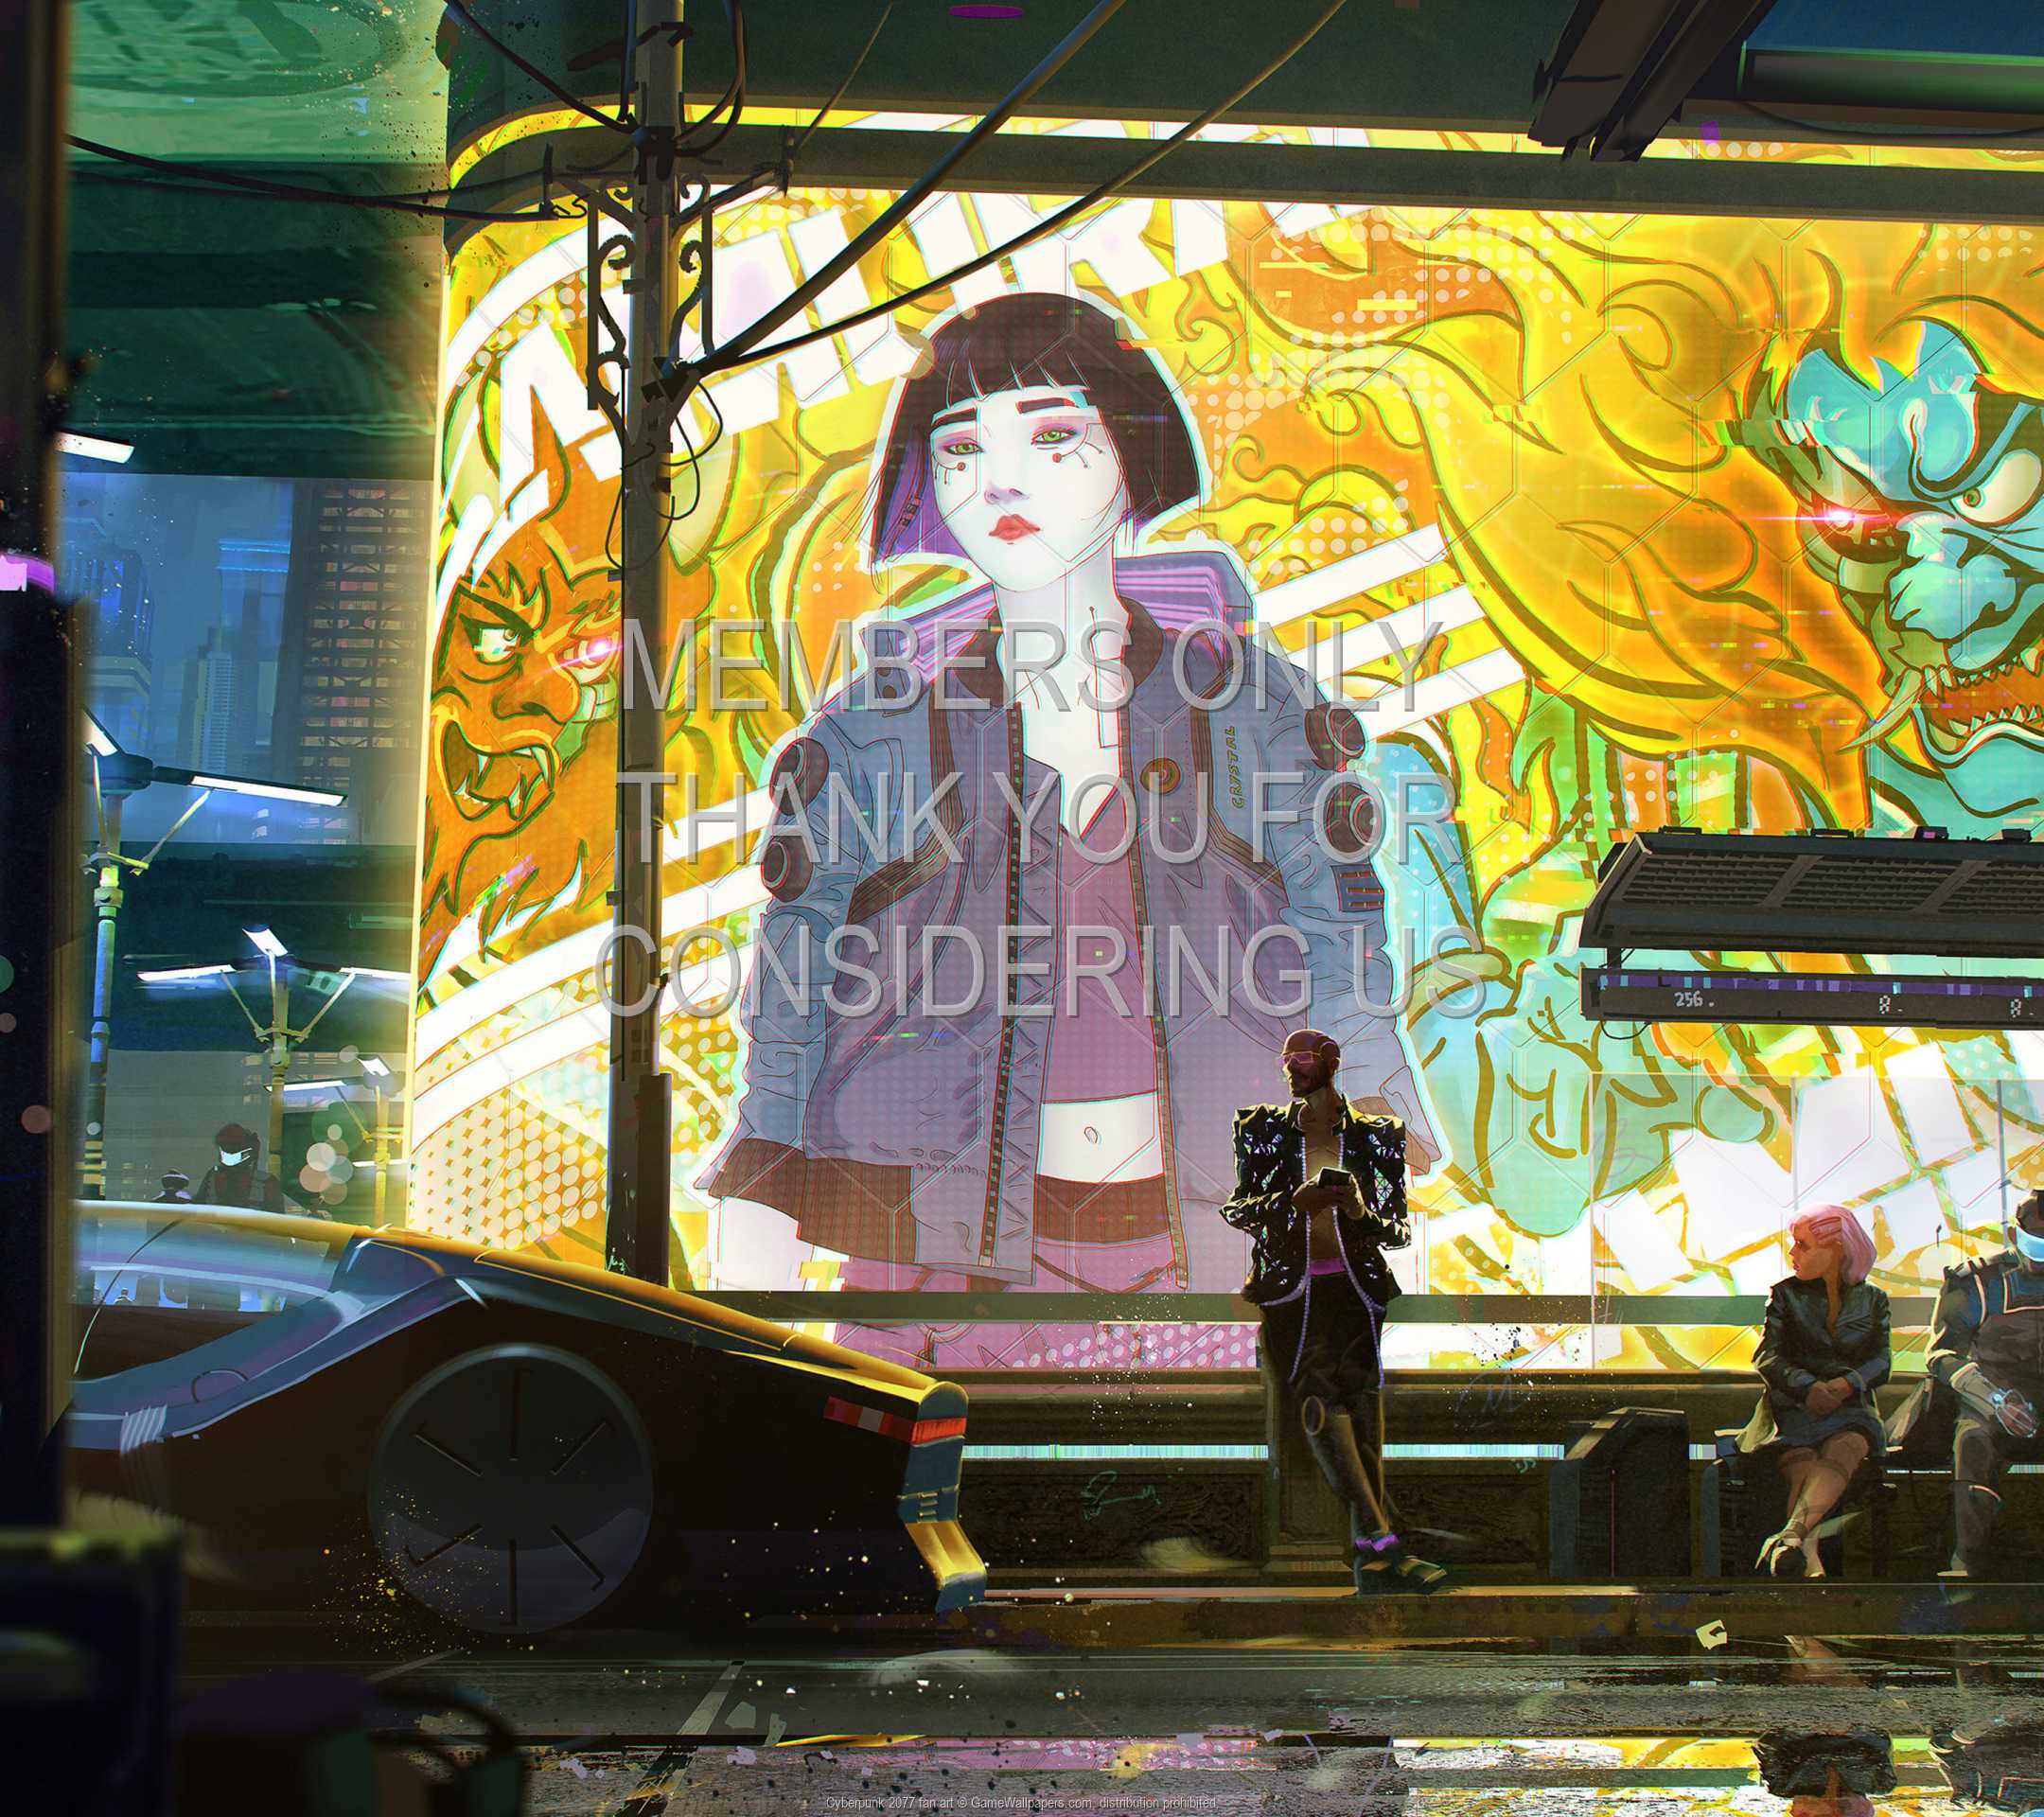 Cyberpunk 2077 fan art 1080p%20Horizontal Mobile wallpaper or background 05